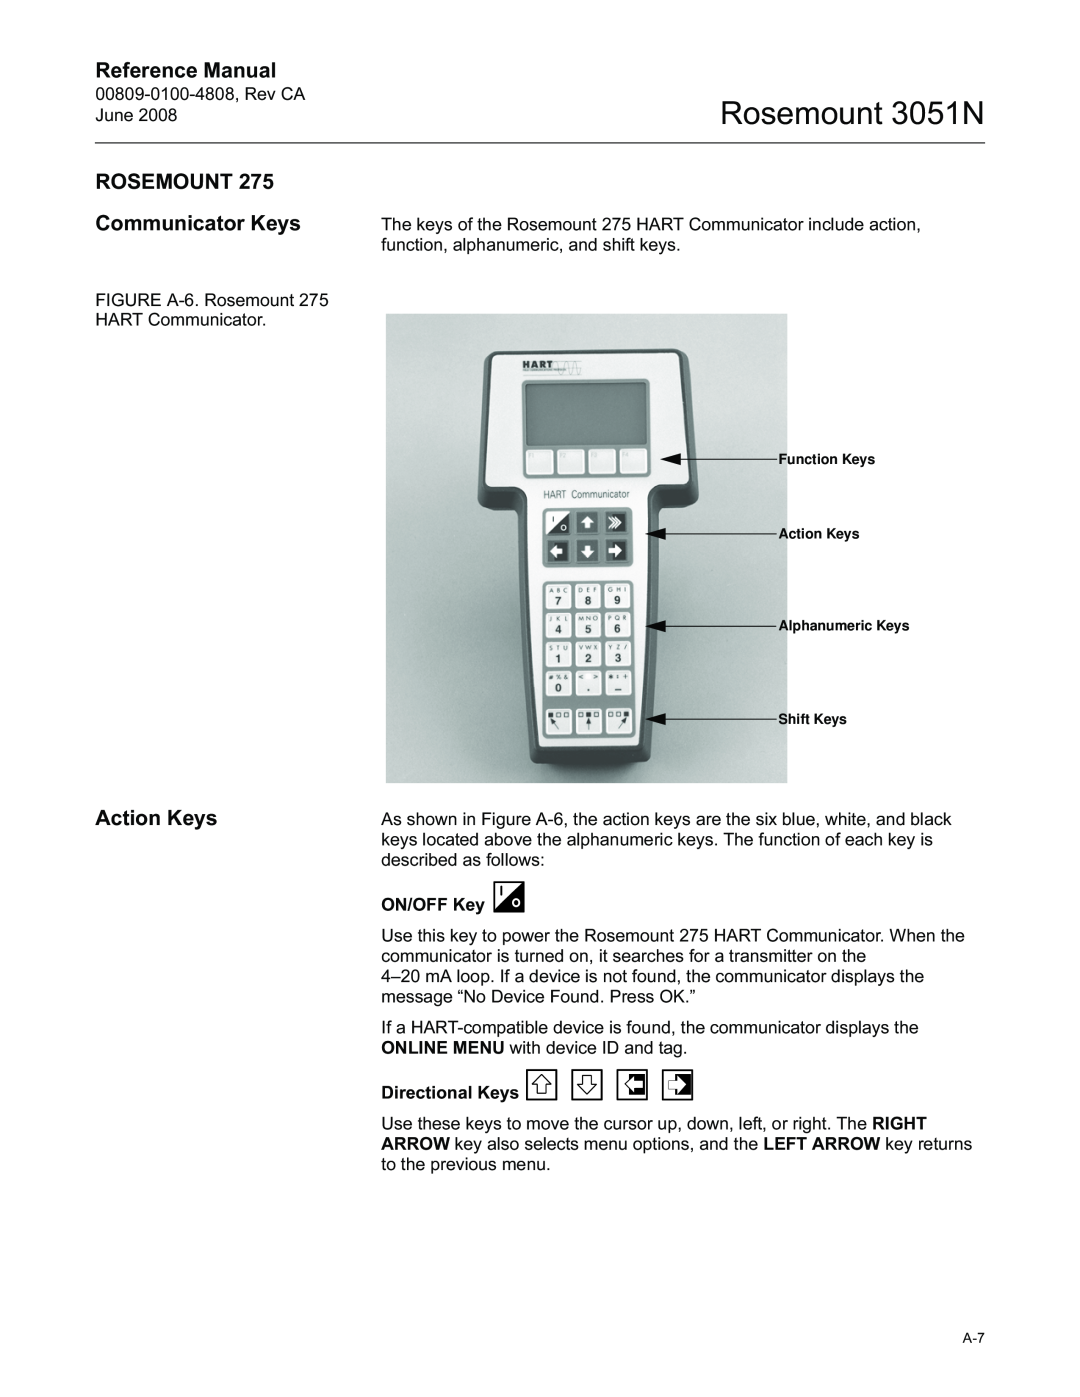 Emerson manual Communicator Keys, Action Keys, Rosemount 3051N, Reference Manual 